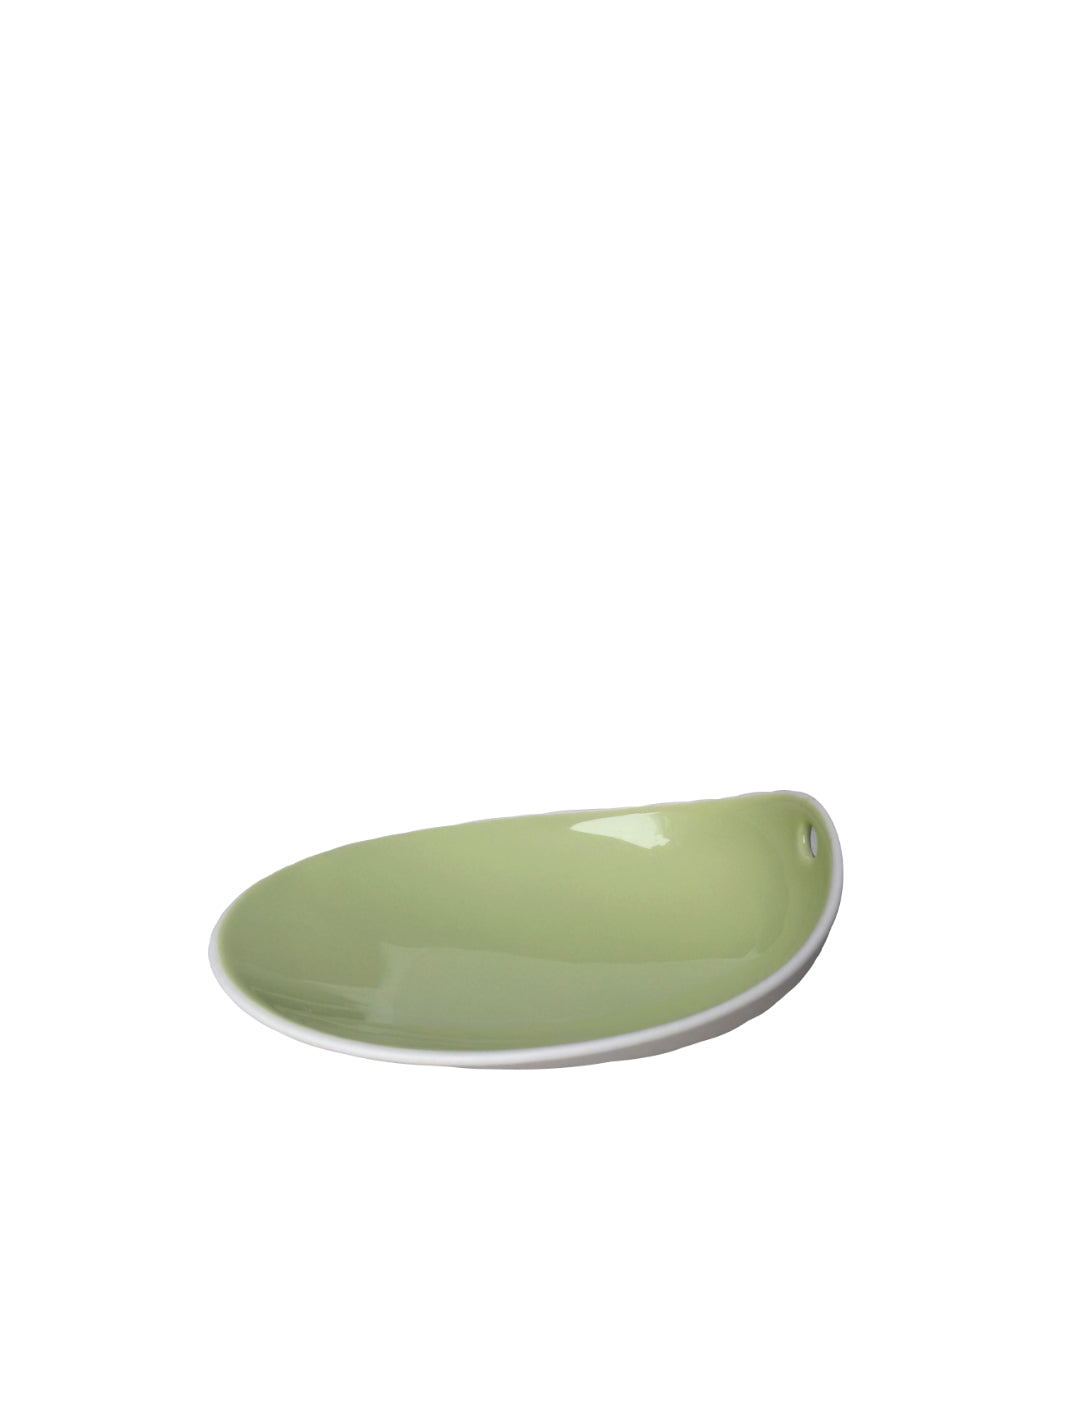 COOKPLAY Jomon Small Plate (14x11cm/5.5x4.3in)